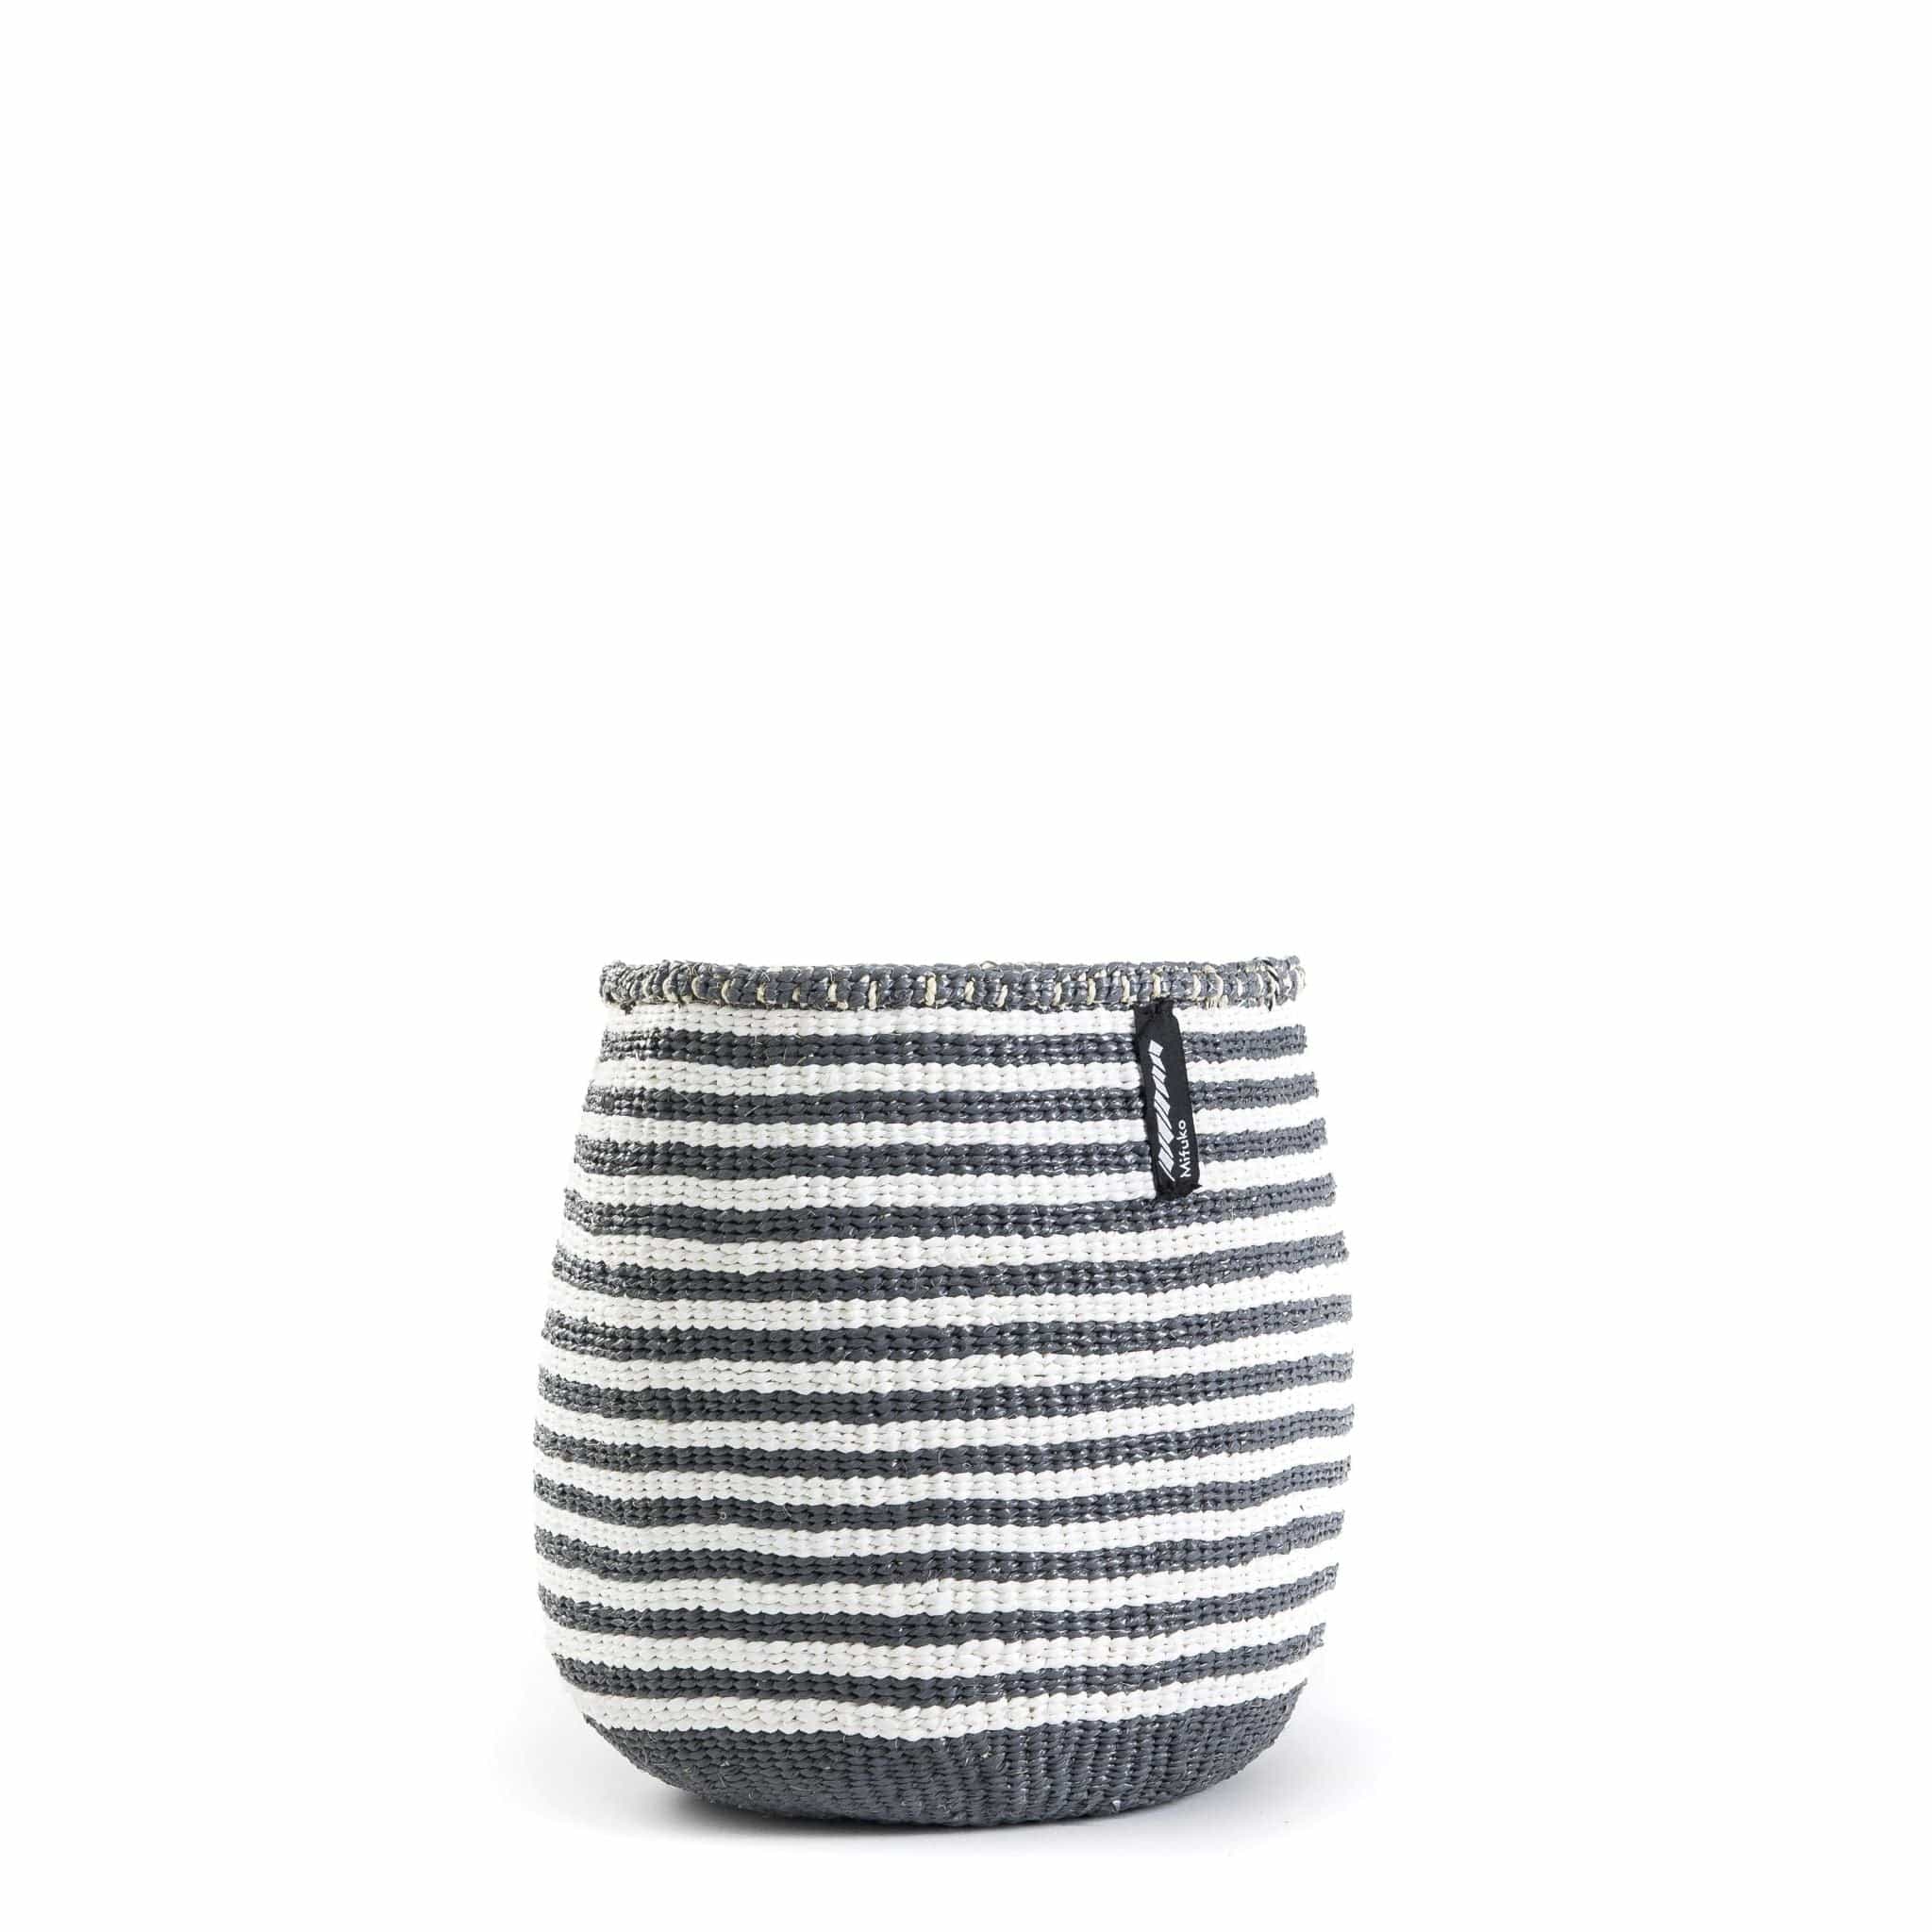 Mifuko Partly recycled plastic and sisal Medium size basket M Kiondo basket | Thin grey stripes M